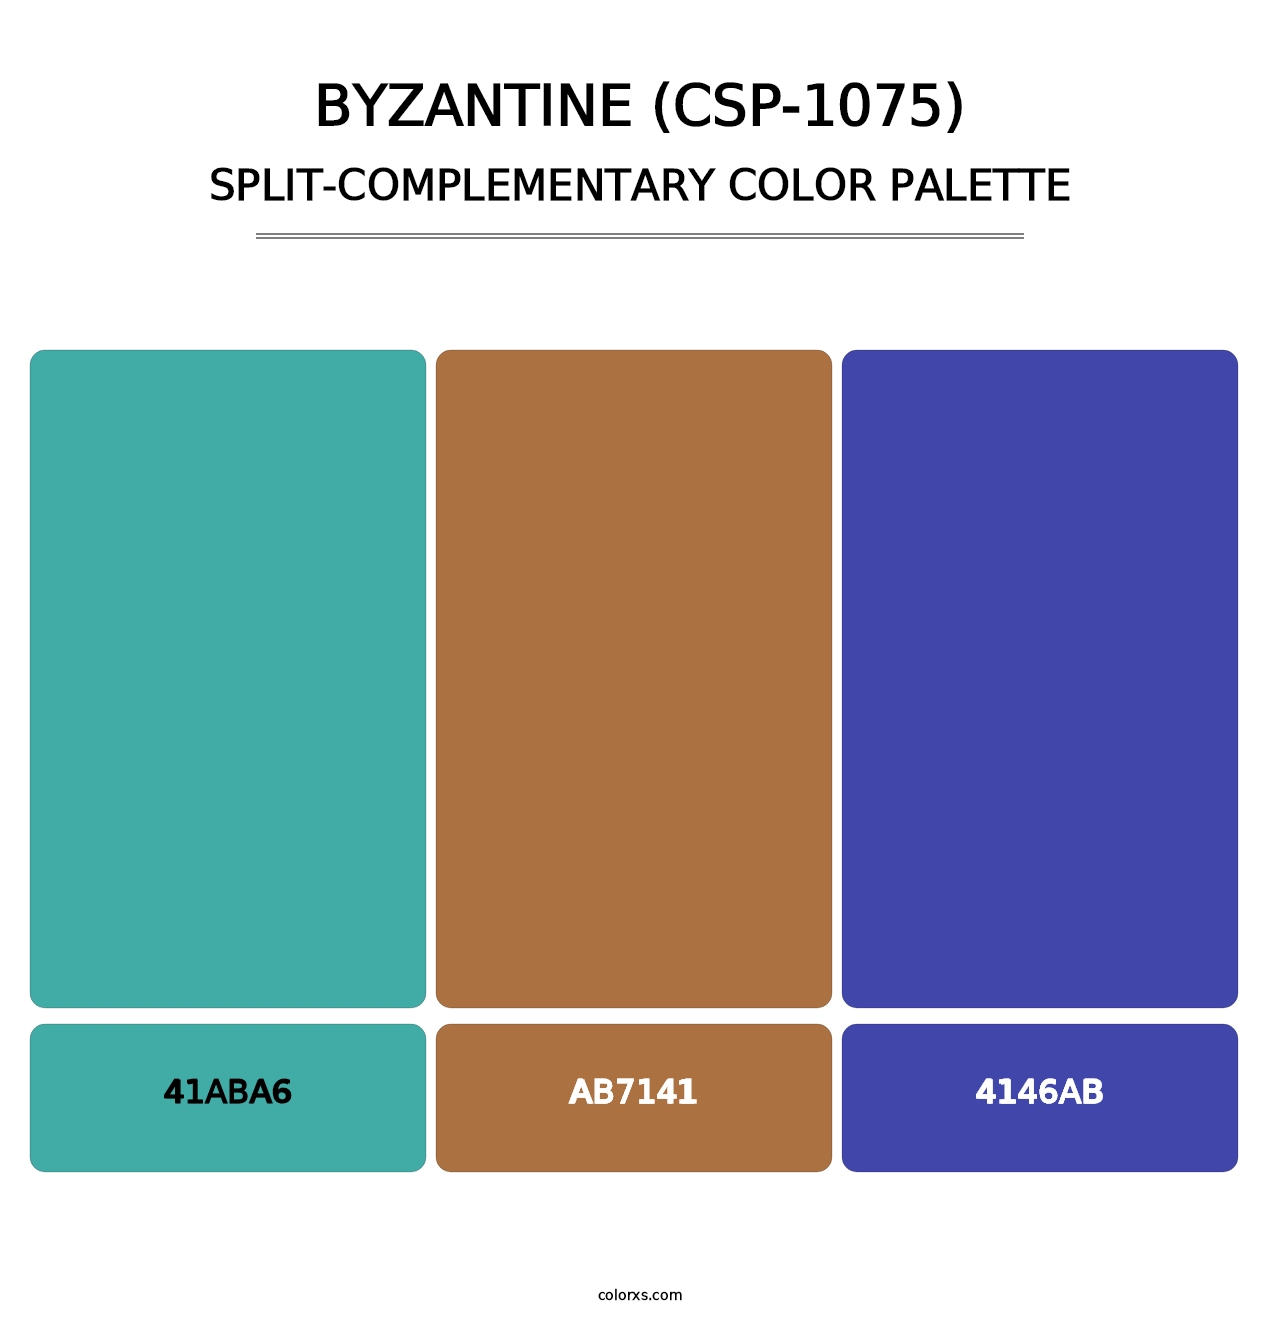 Byzantine (CSP-1075) - Split-Complementary Color Palette